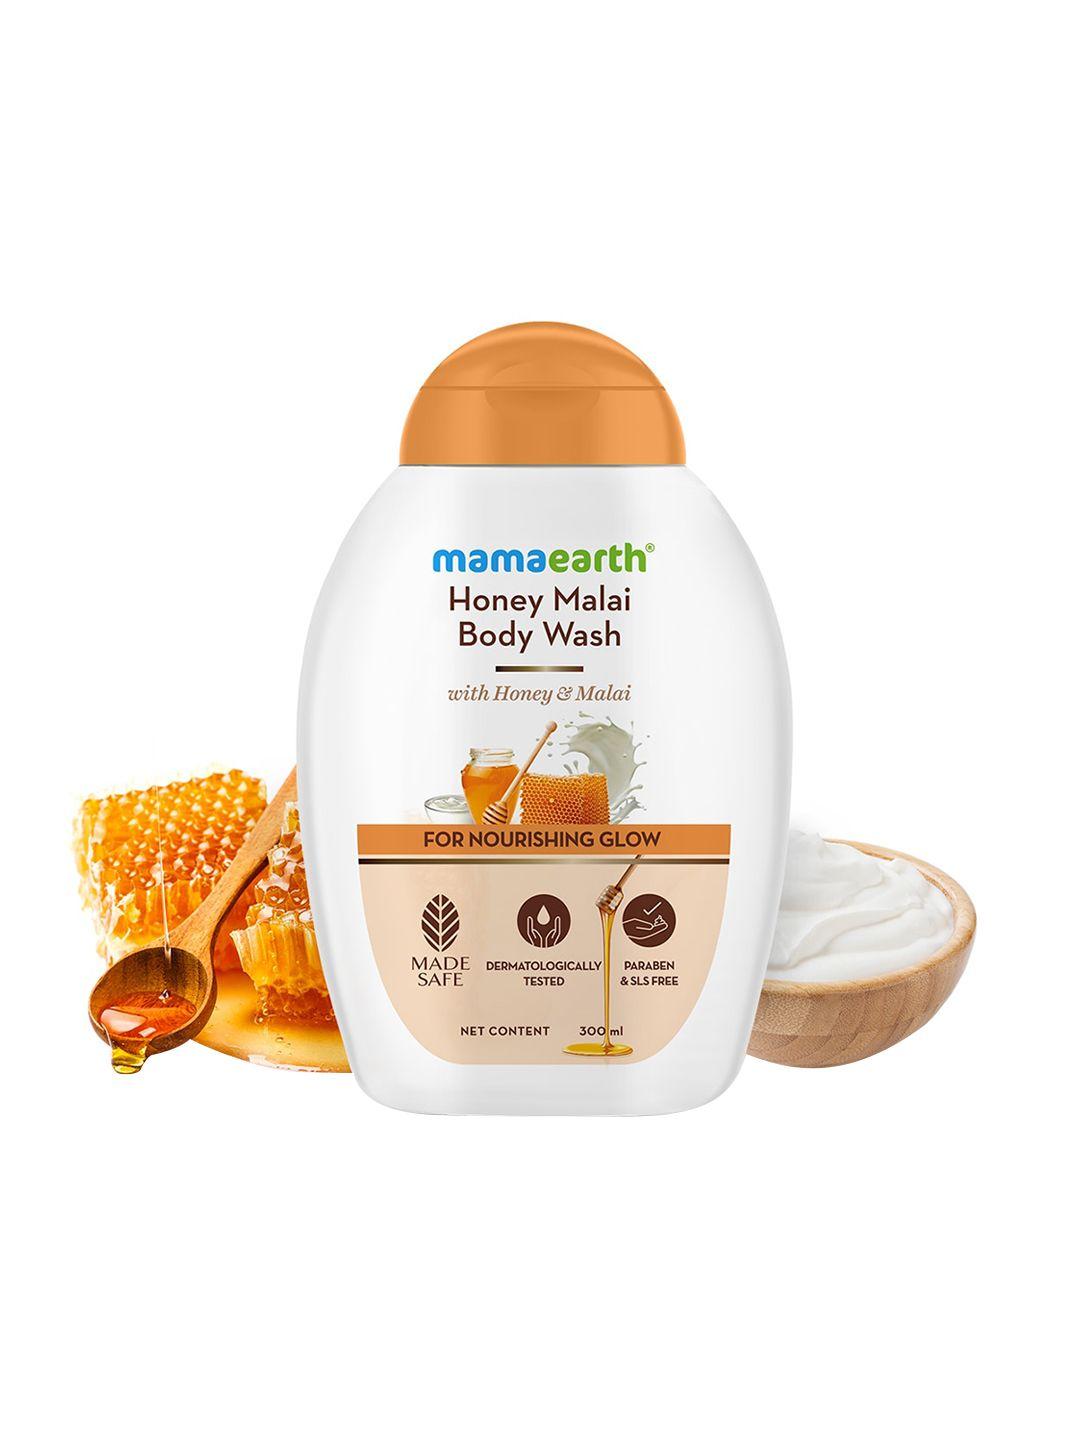 mamaearth honey malai body wash for nourishing glow - 300 ml